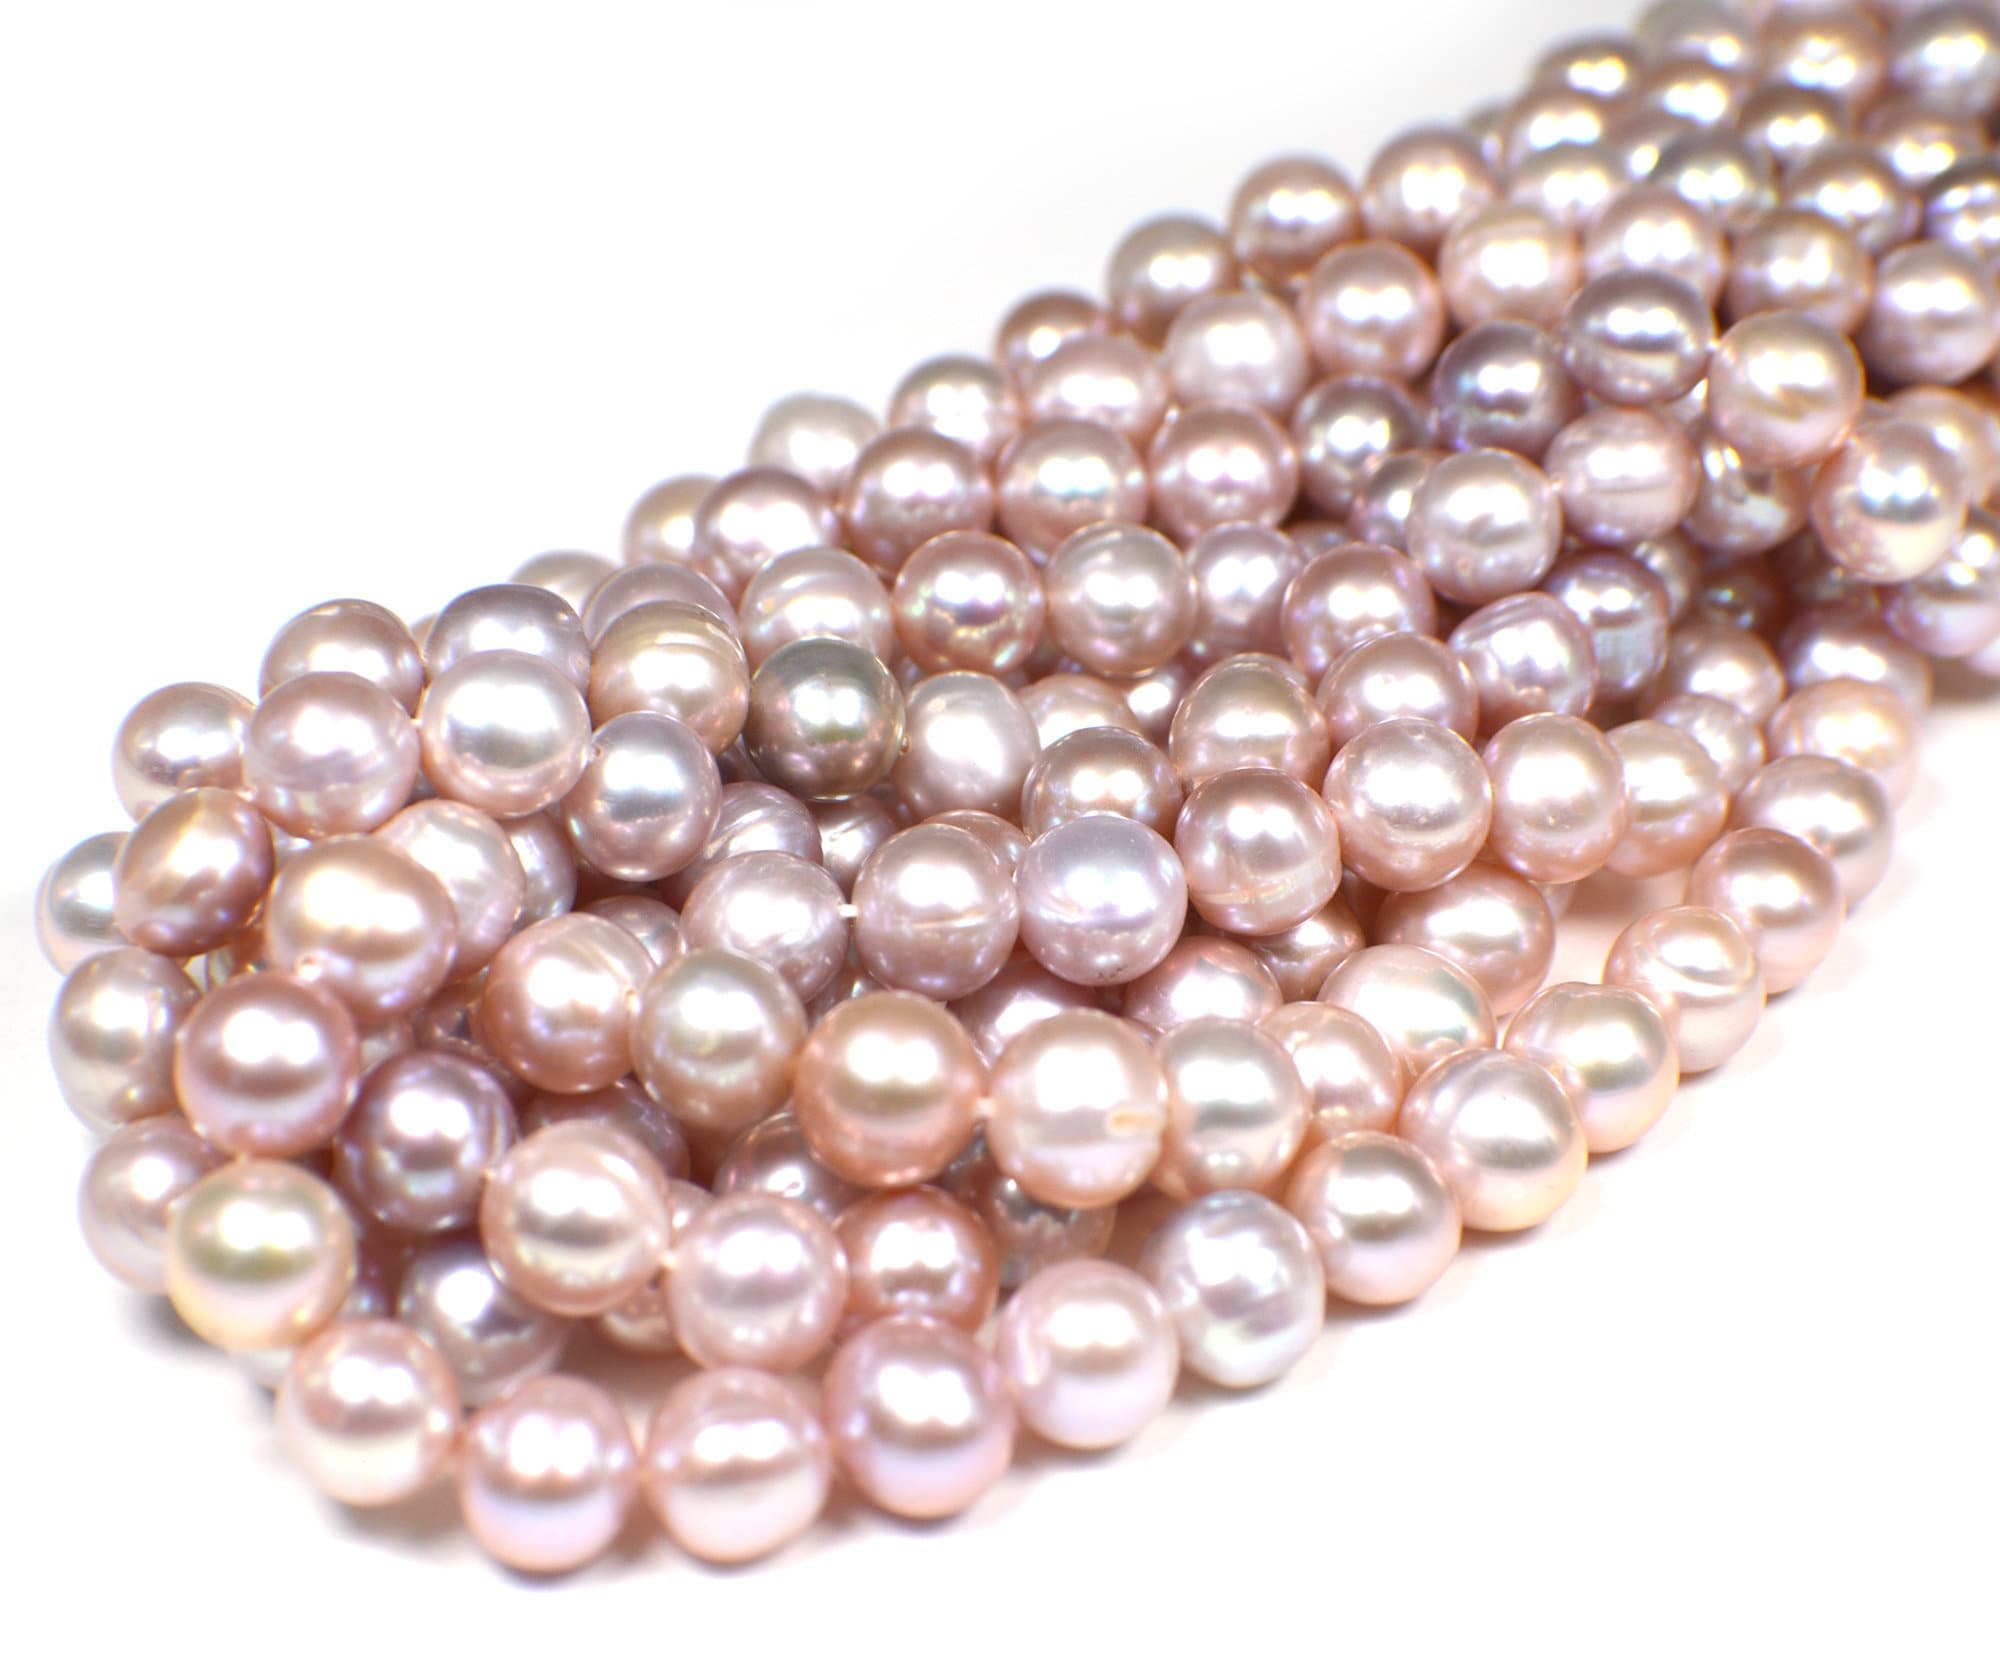 Natural Pink Lilac Blush Shell Bead Bracelet fits Wrist 7 Inch 